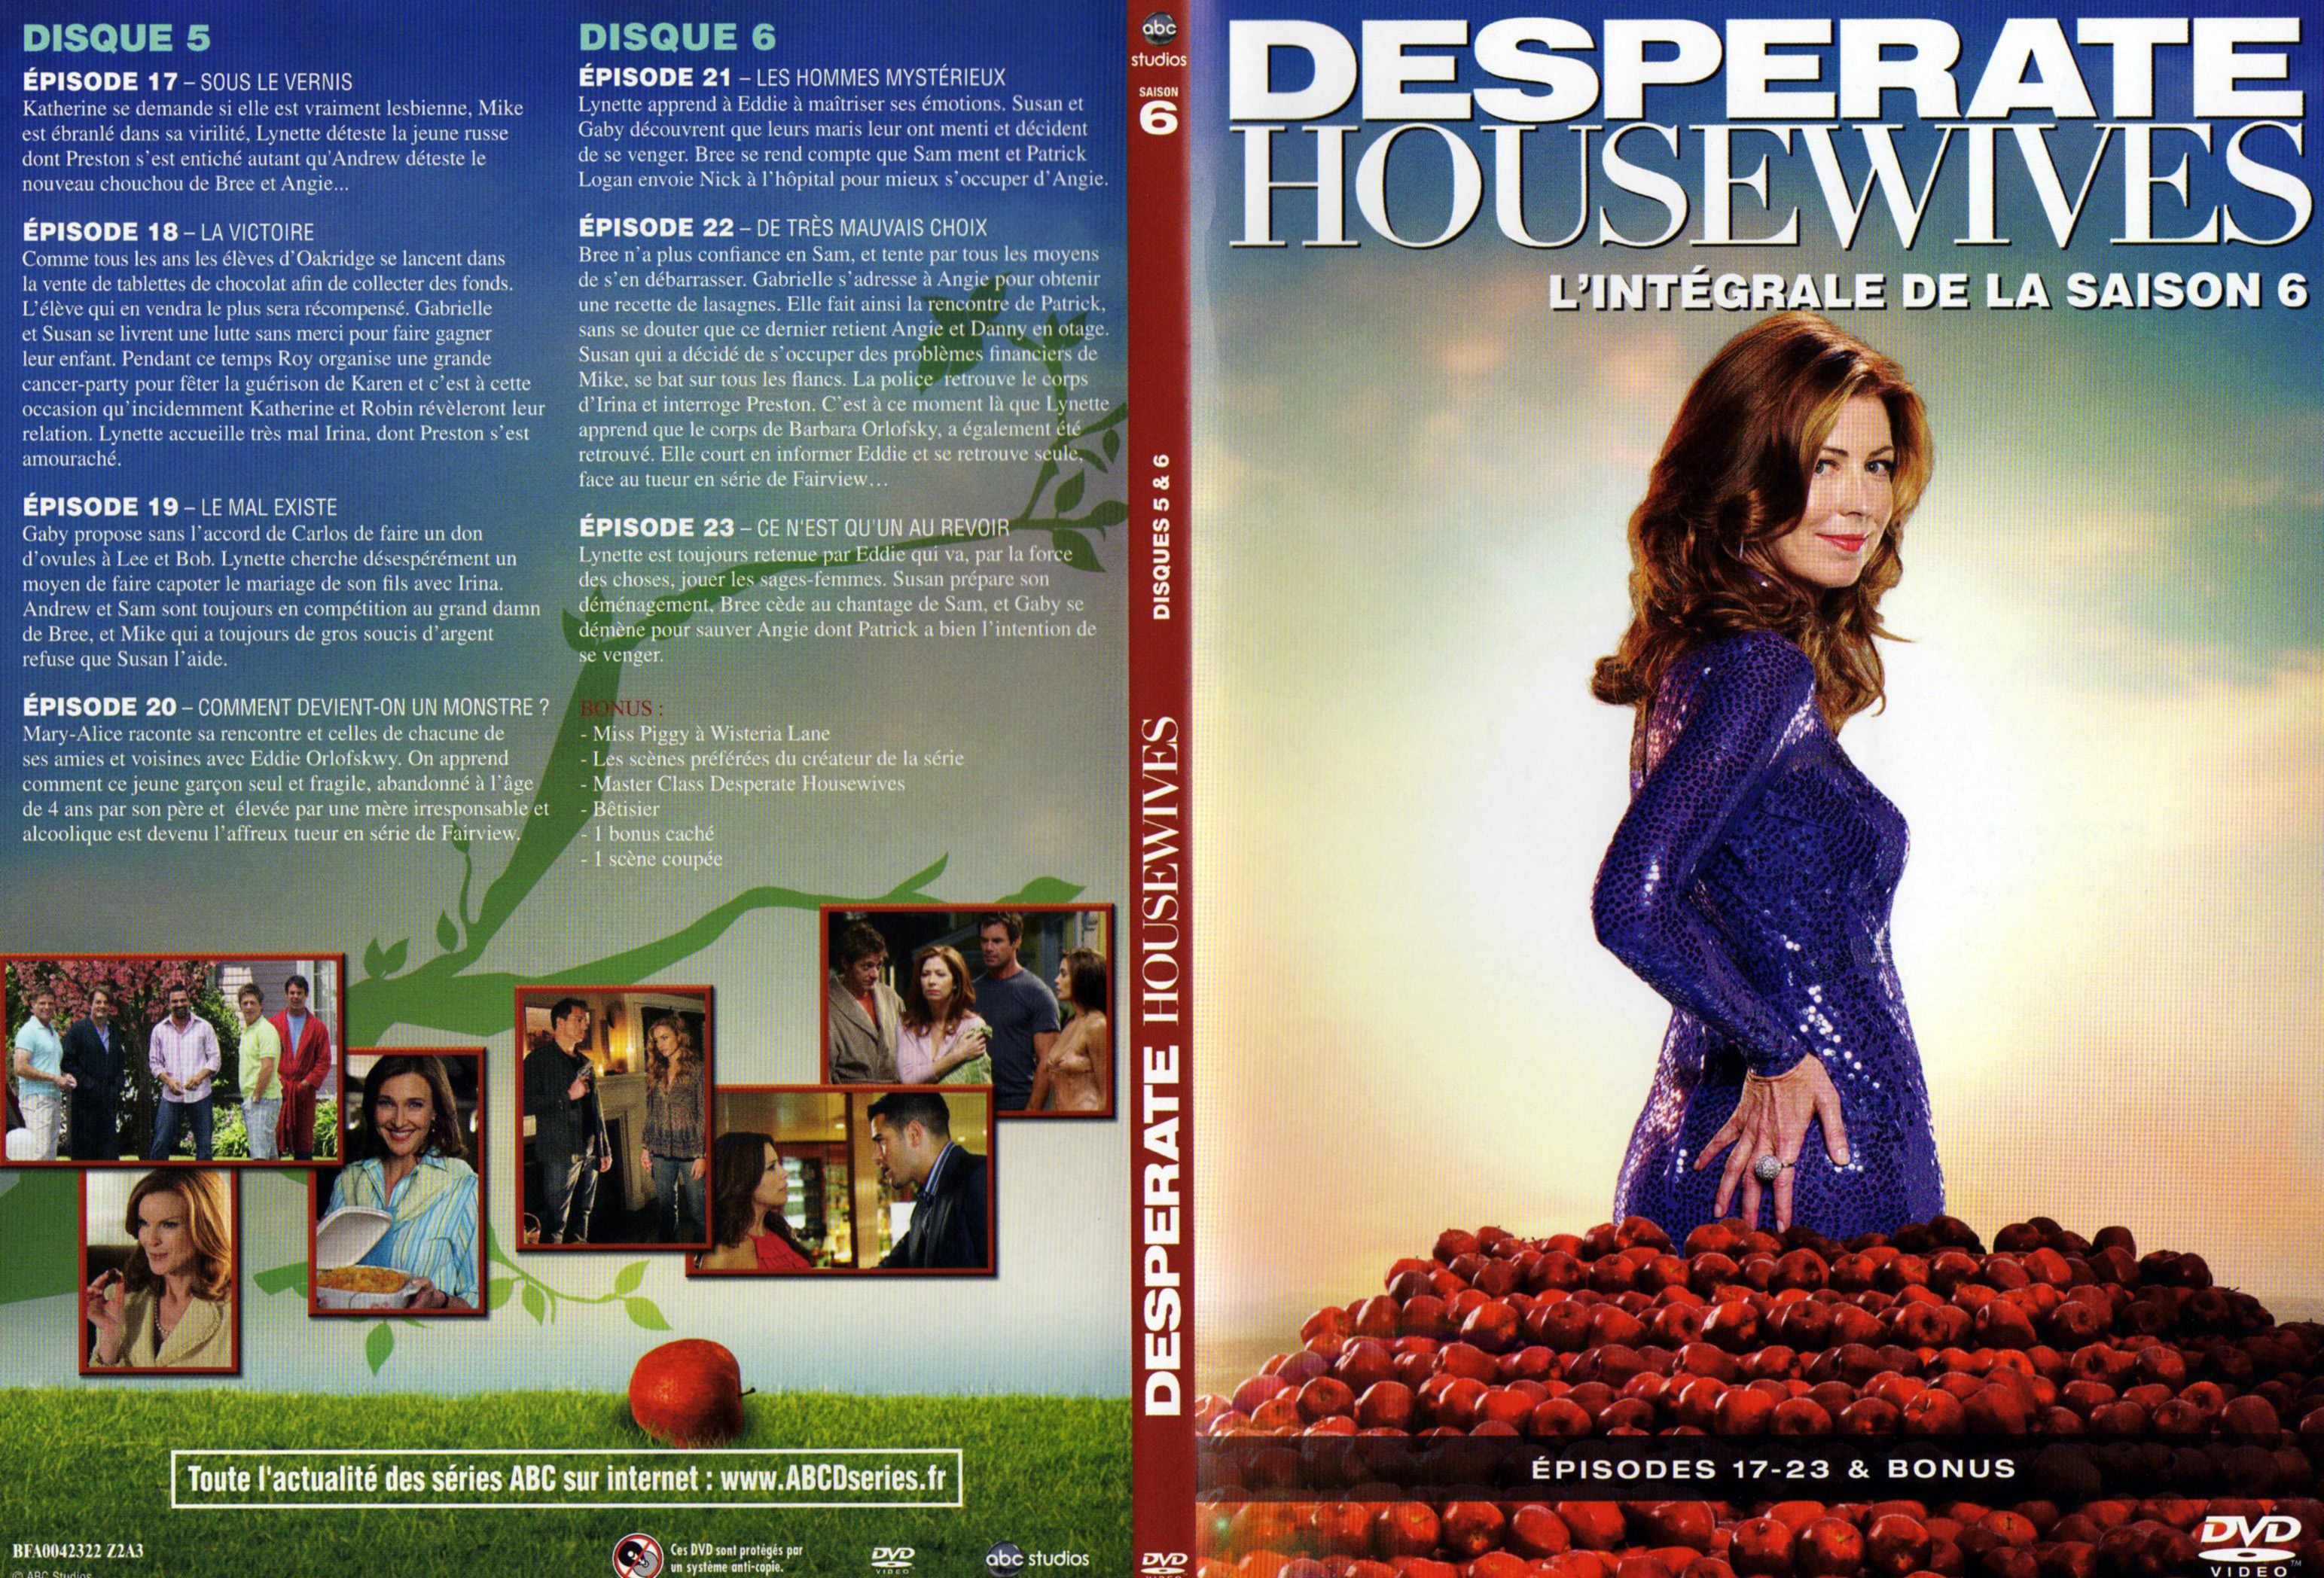 Jaquette DVD Desperate housewives Saison 6 DVD 3